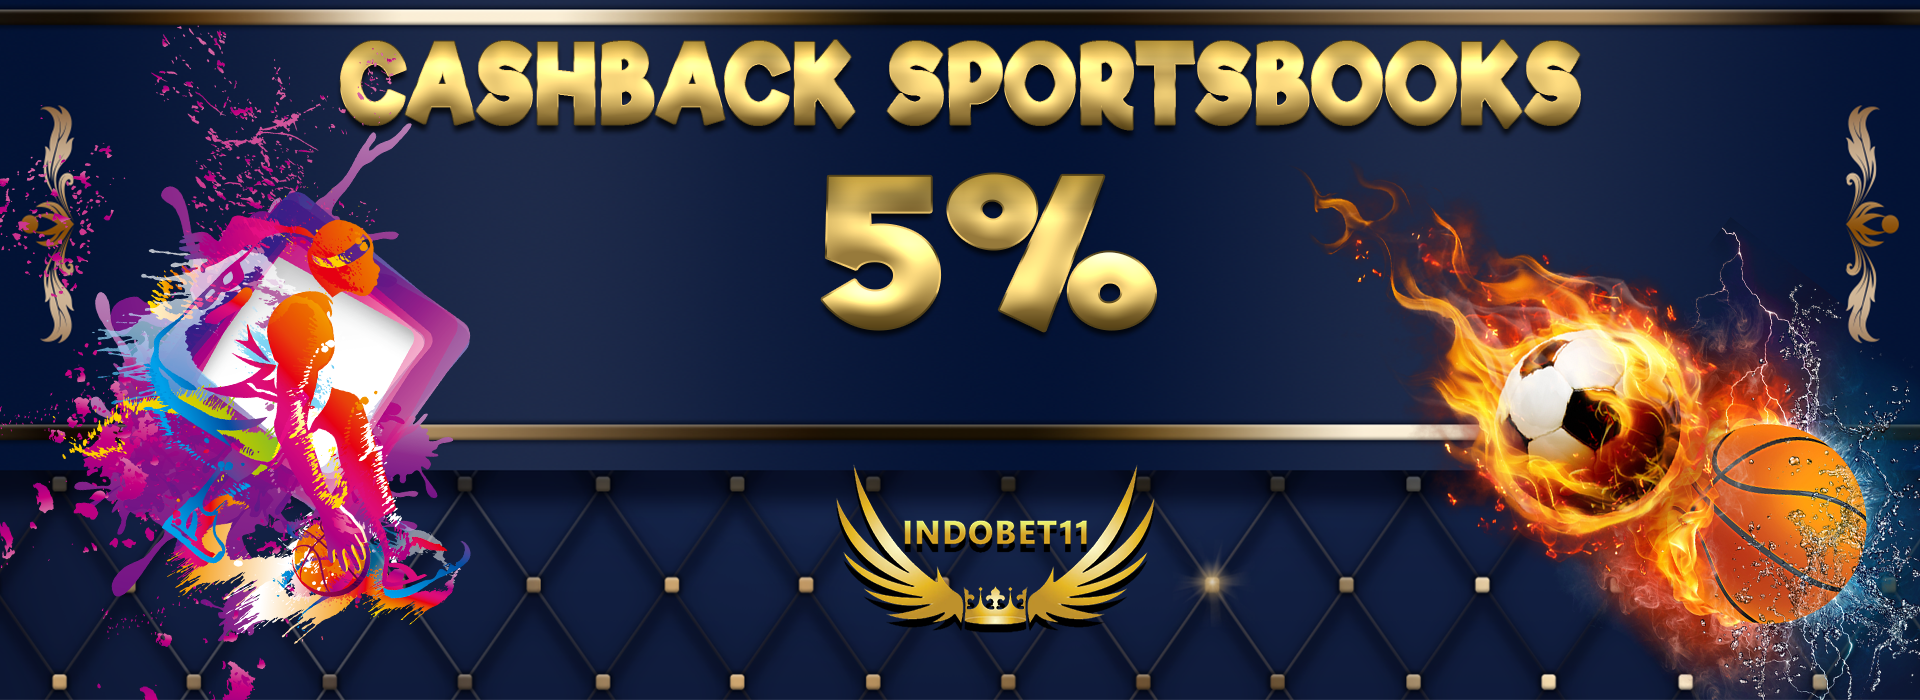 Cashback SportBook 5 %